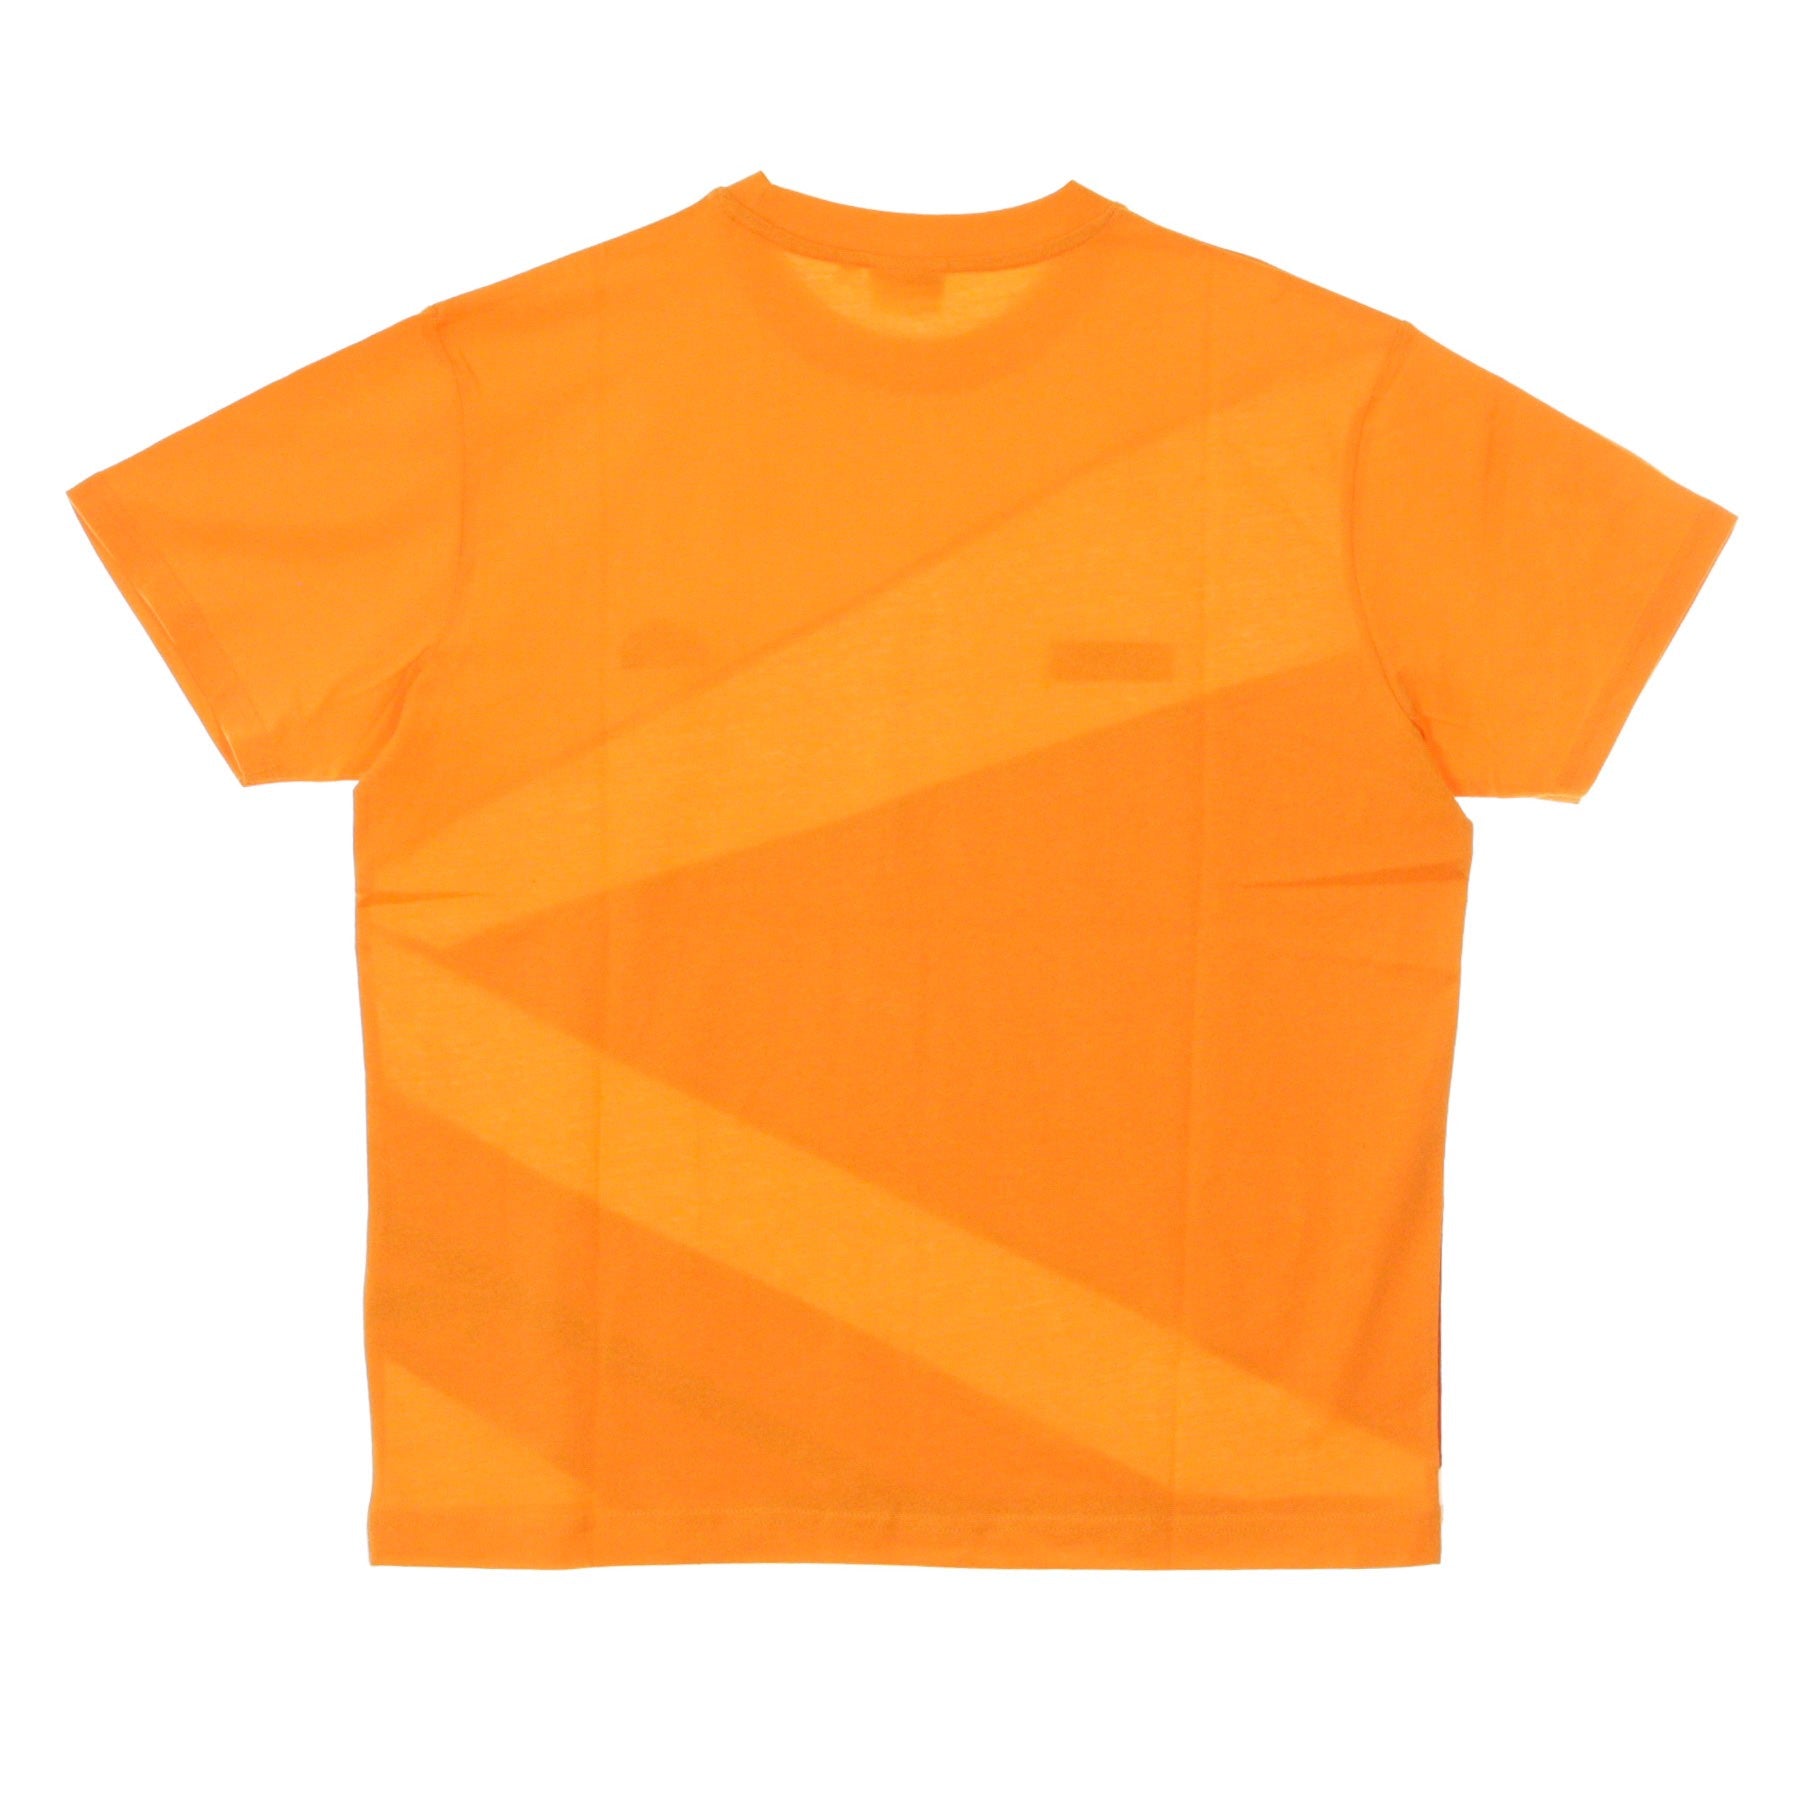 Men's T-shirt Orange Popsicle T-shirt